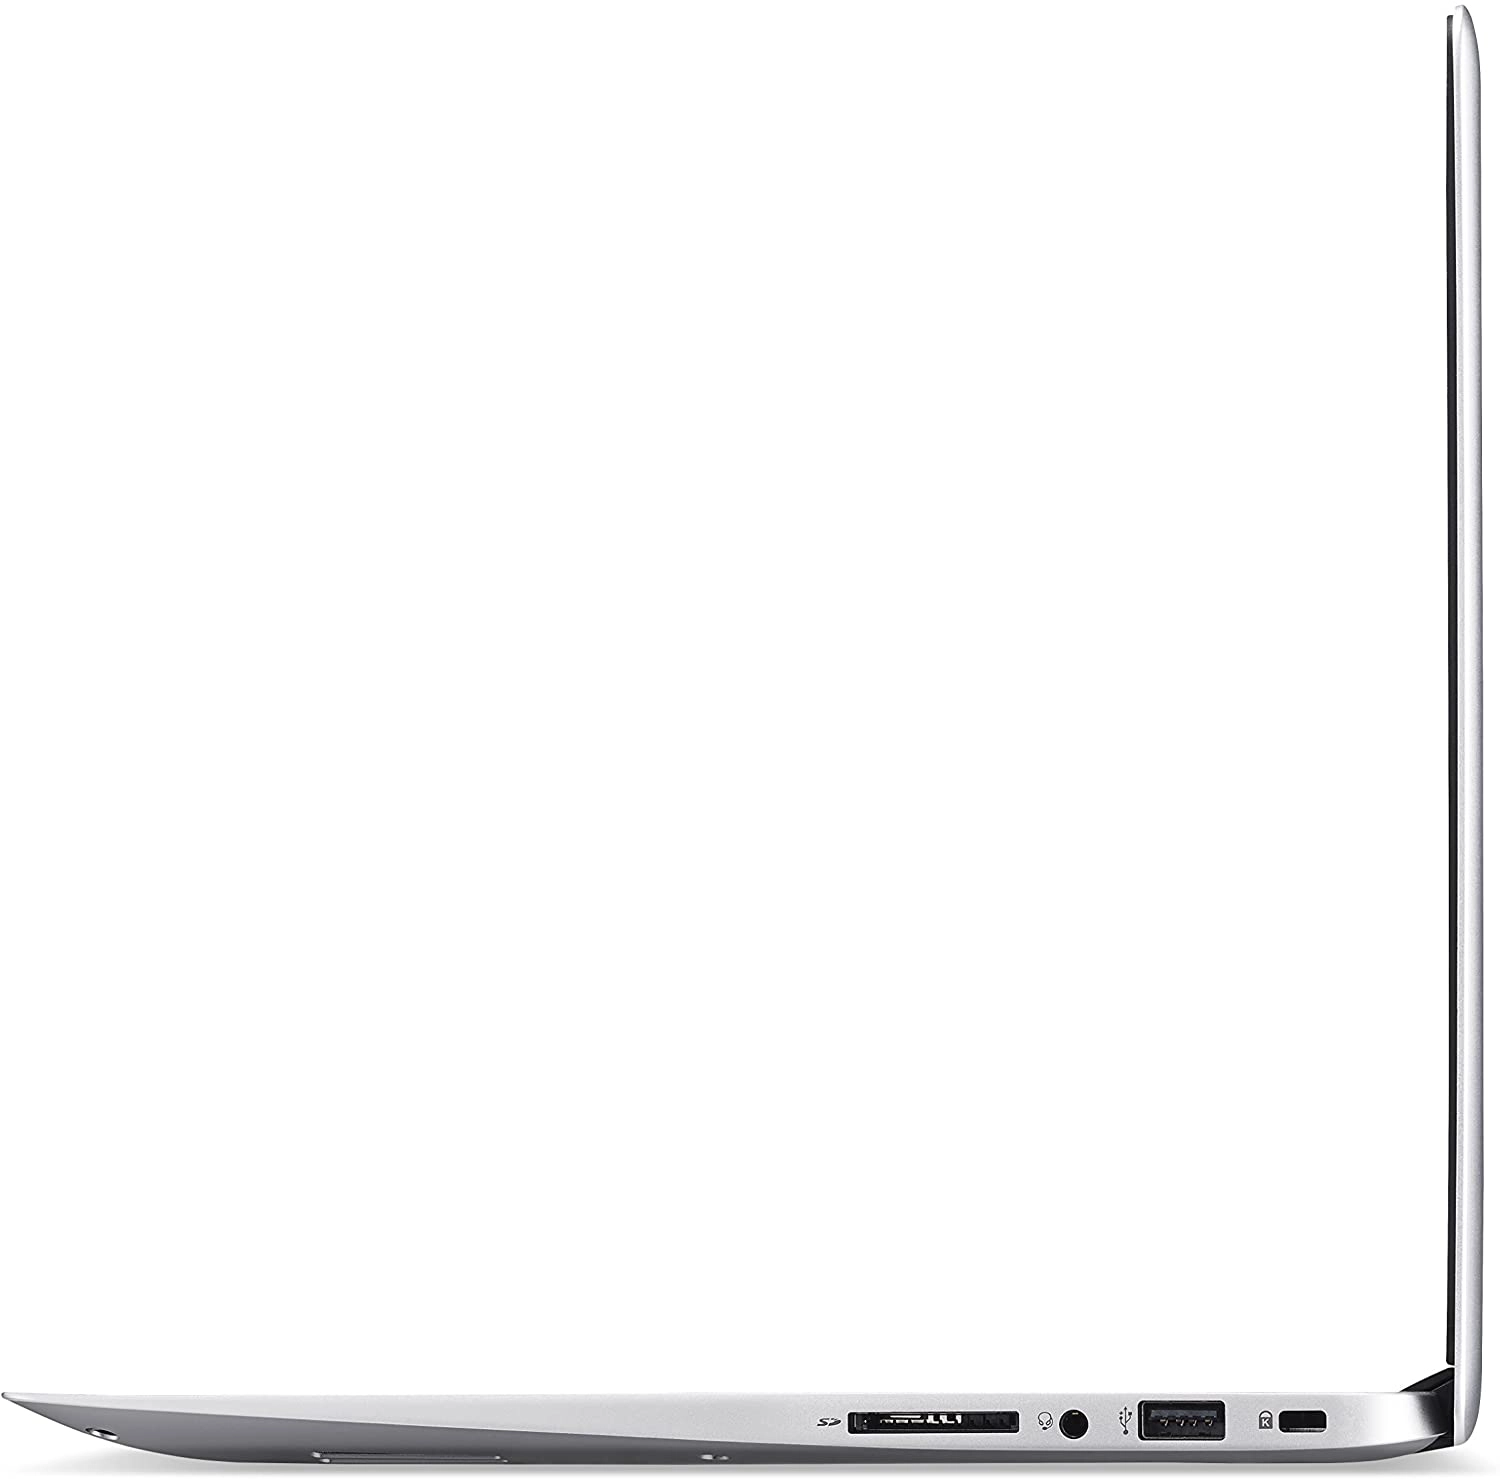 Acer SF314-52-787X laptop image